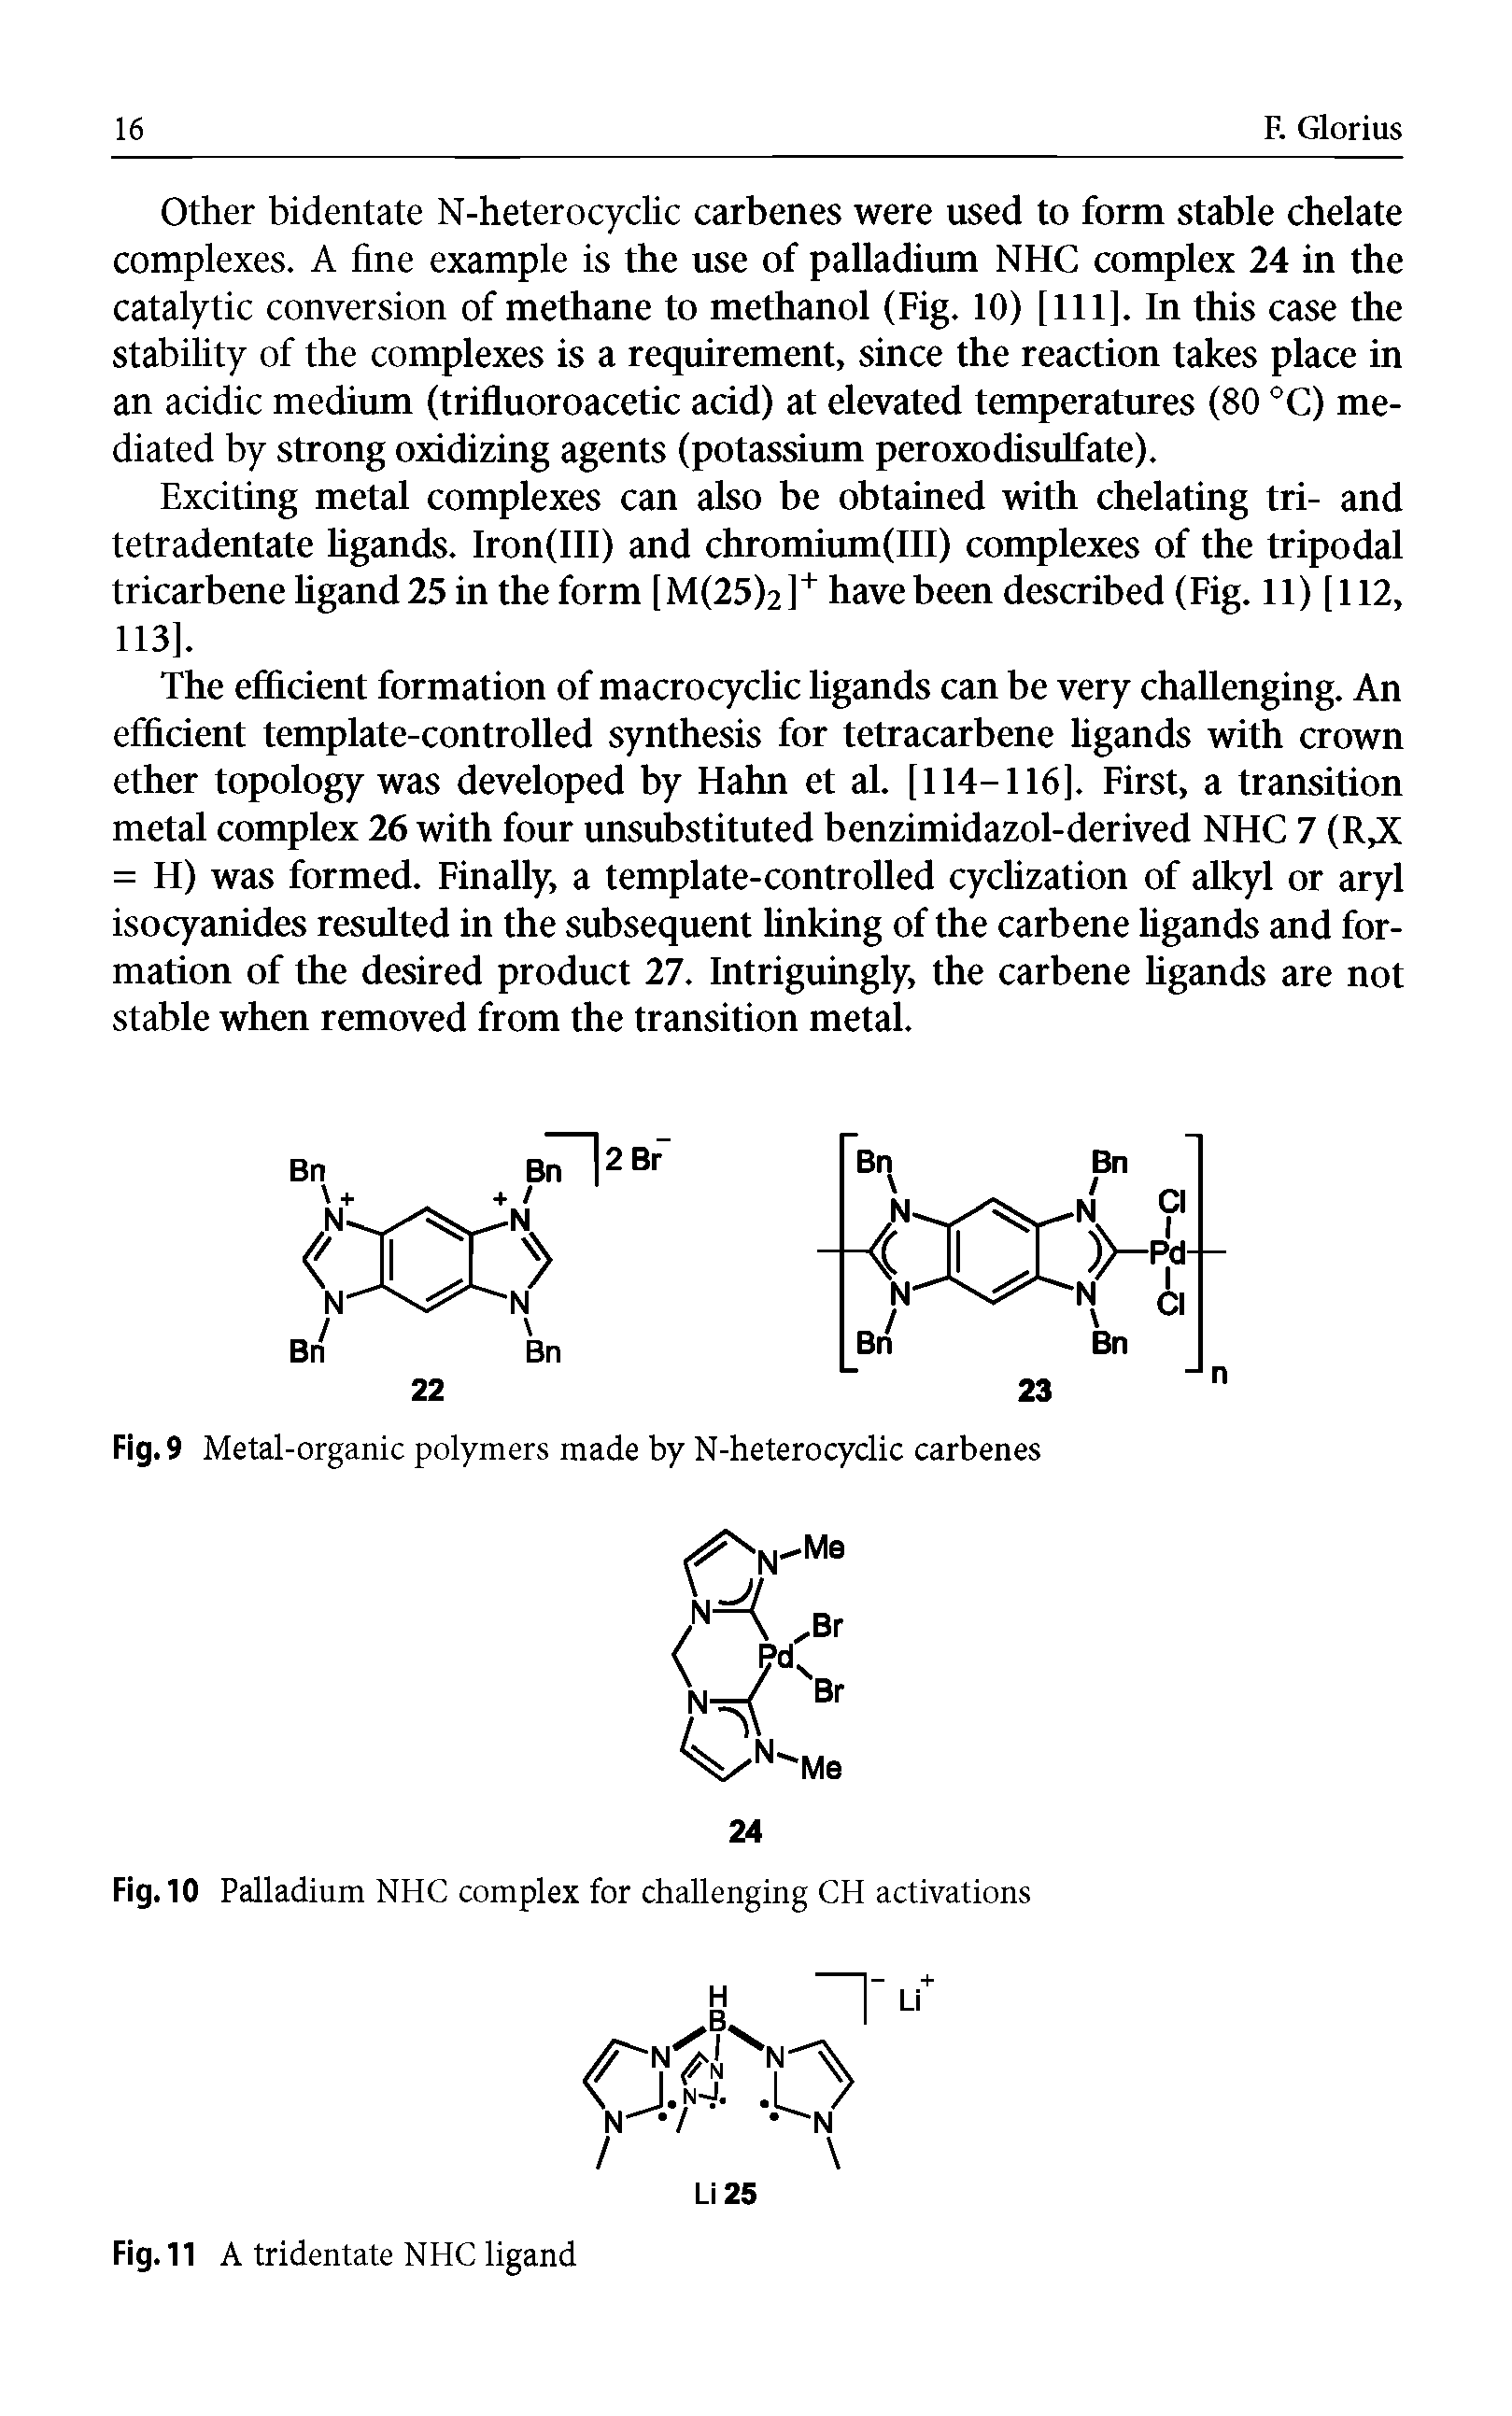 Fig. 9 Metal-organic polymers made by N-heterocyclic carbenes...